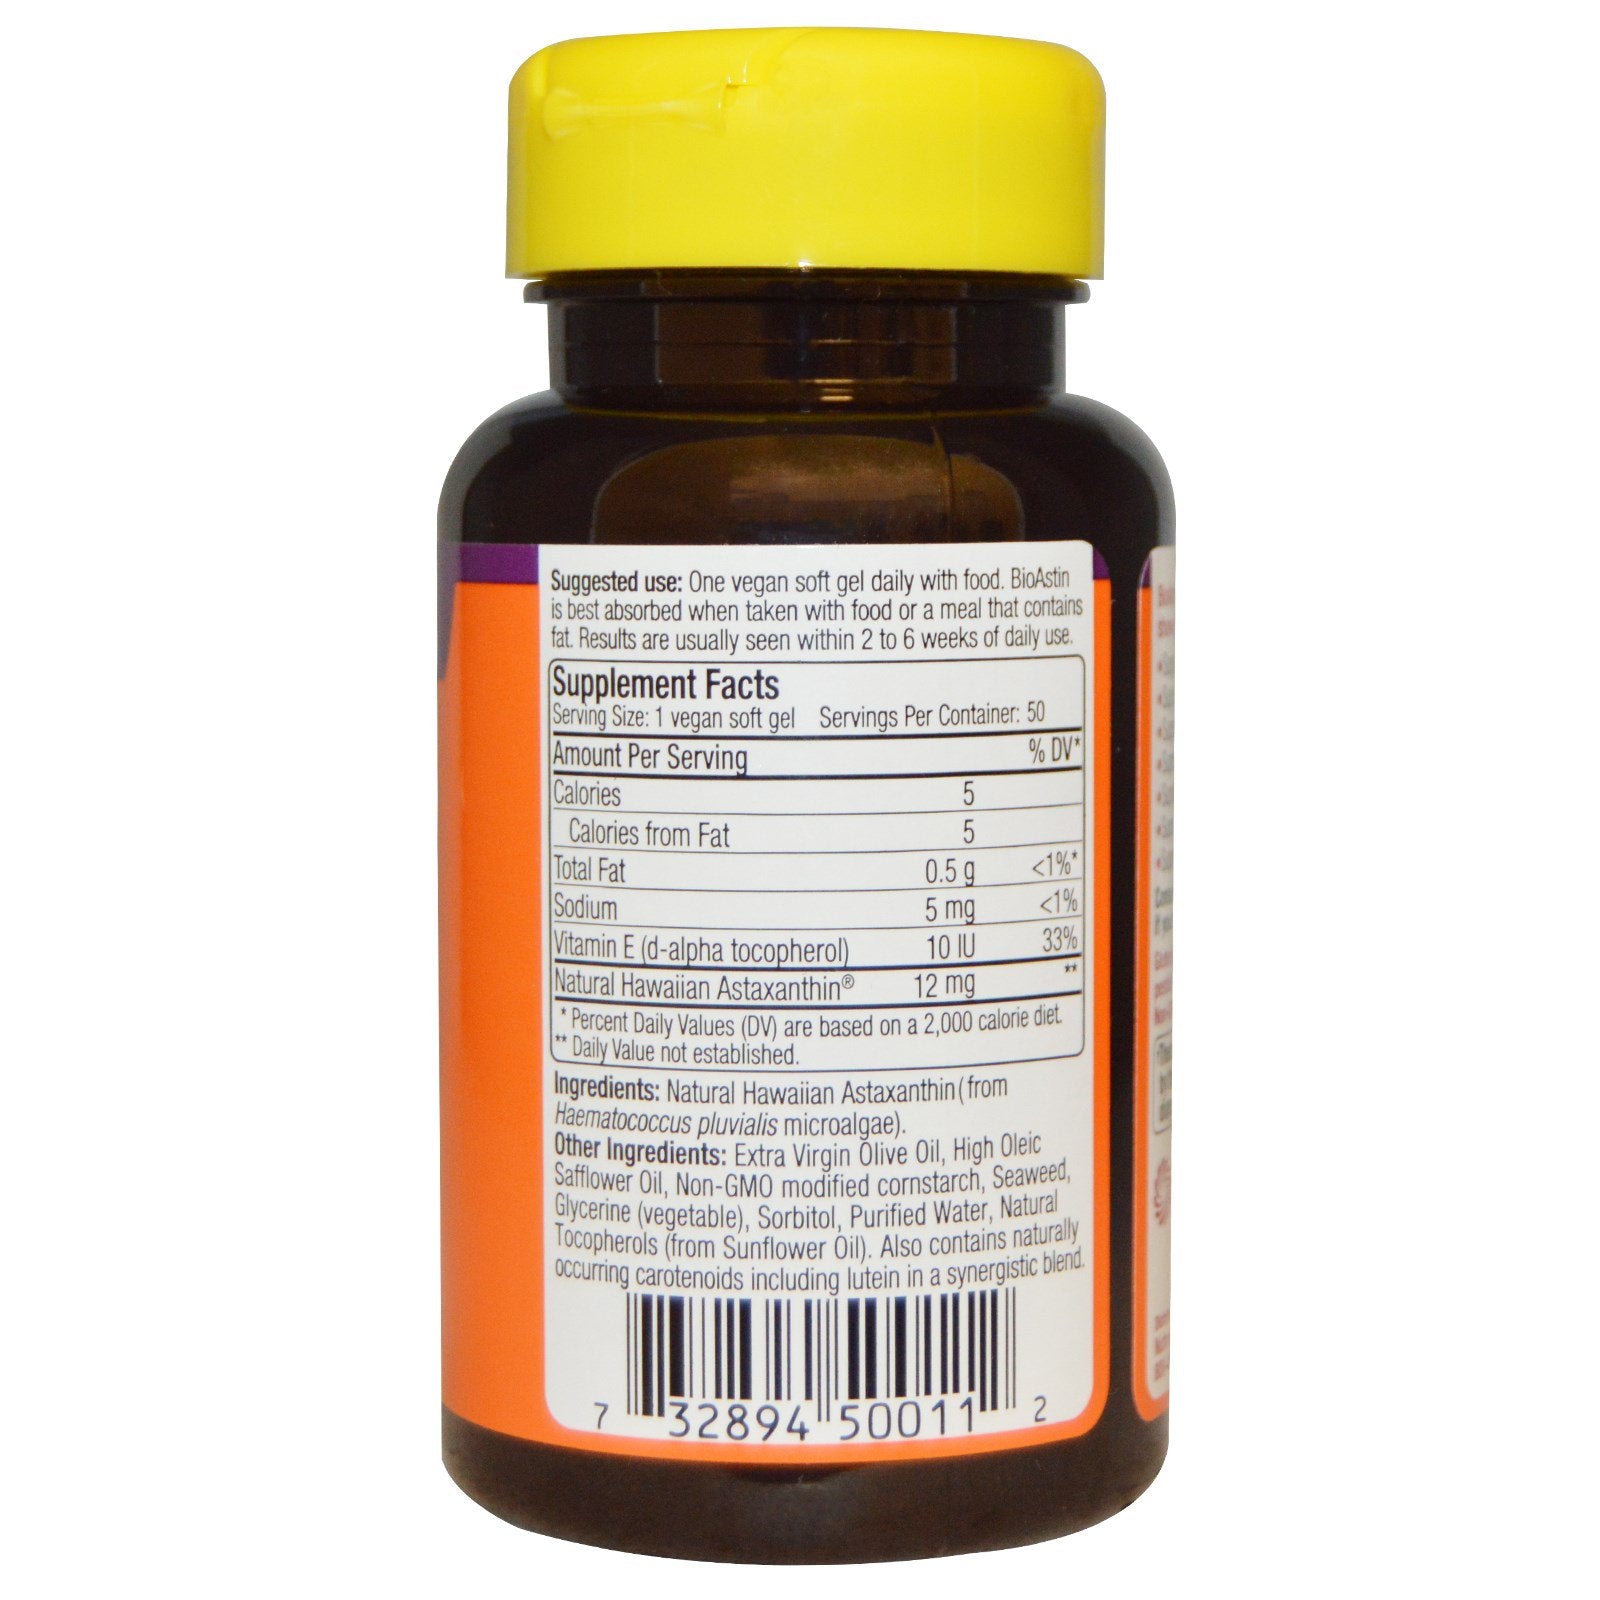 Nutrex Hawaii, BioAstin, 12 mg, 50 Vegan Soft Gels